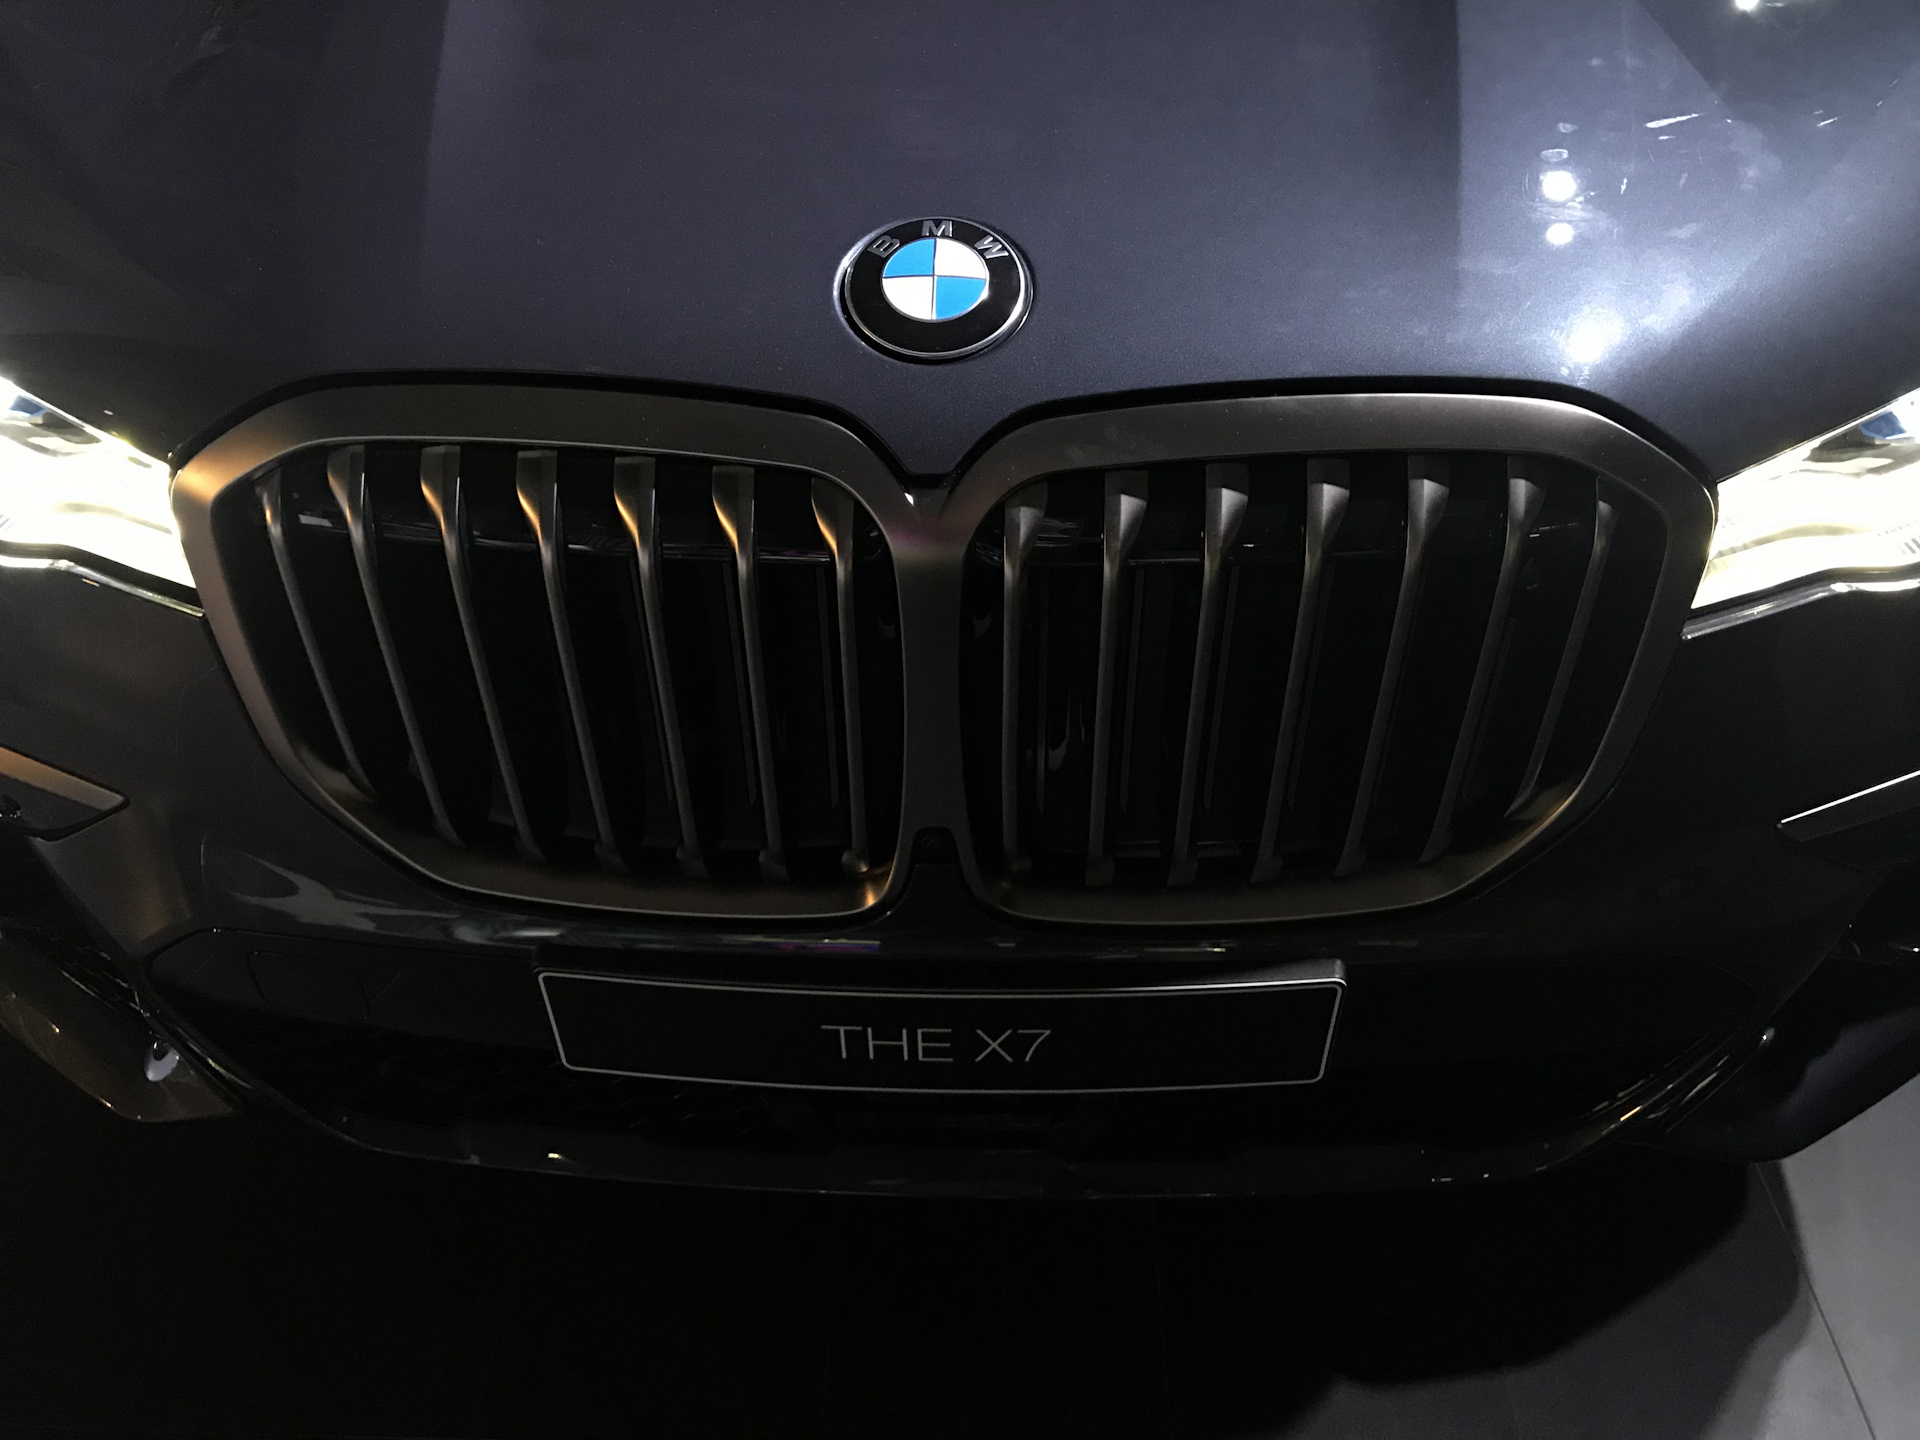  BMW 7 series  X7 26012019 2